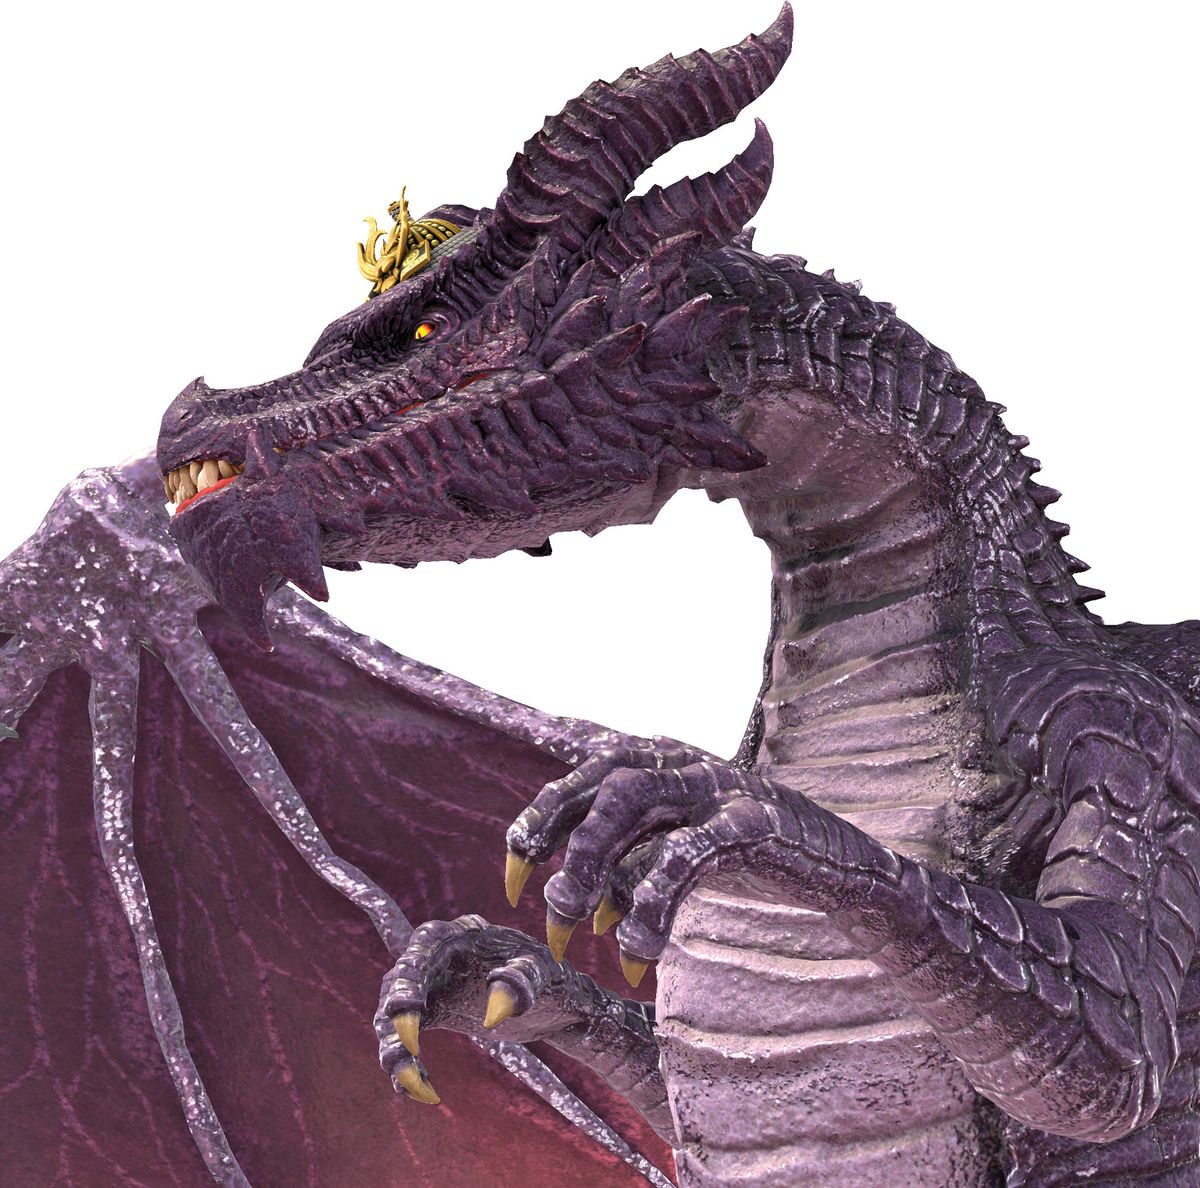 Double Dragon II: The Revenge, Double Dragon Wiki